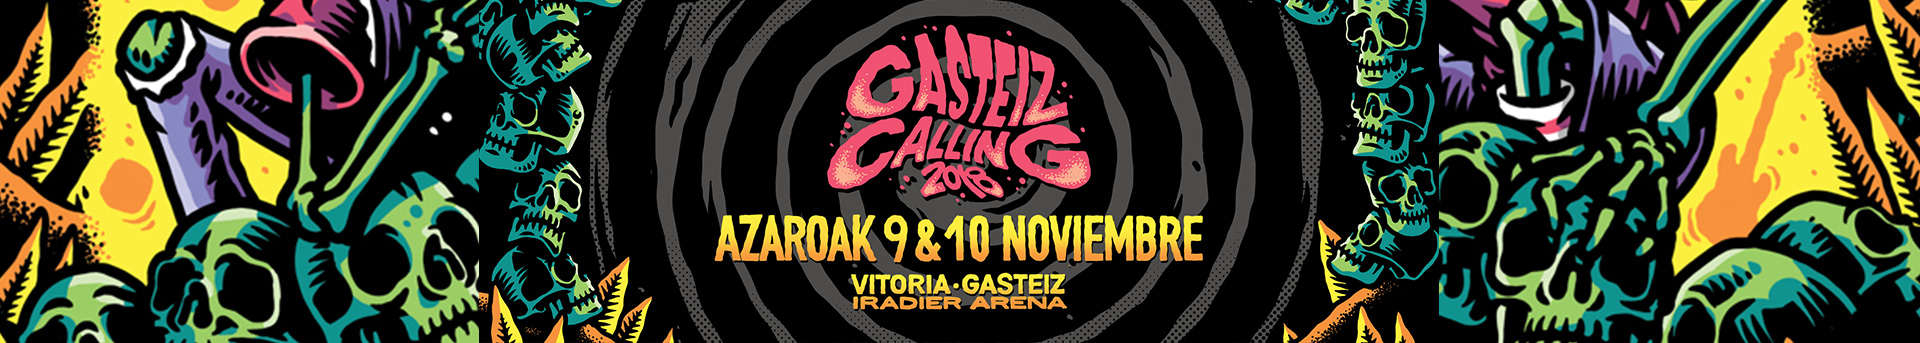 cabecera-musikaze-gasteiz-calling-2018